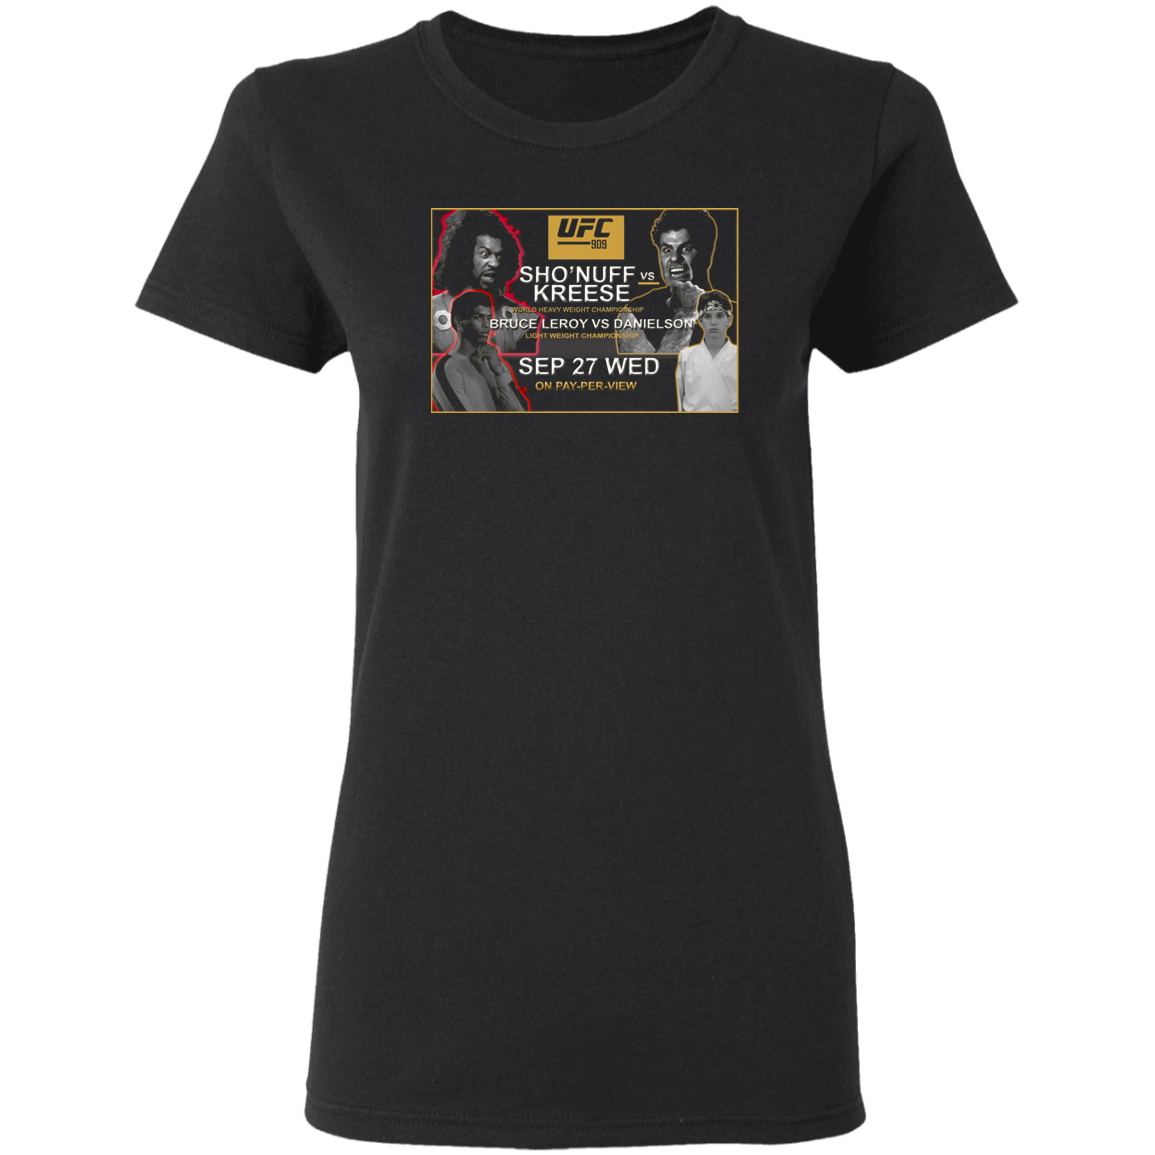 Artichoke Fight Gear Custom Design #15. UFC 909. Sho'Nuff vs Kreese. Co Main Event Bruce Lee Roy vs Danielson. MMA. UFC / The Last Dragon Movie Parody. Ladies' 100% preshrunk cotton